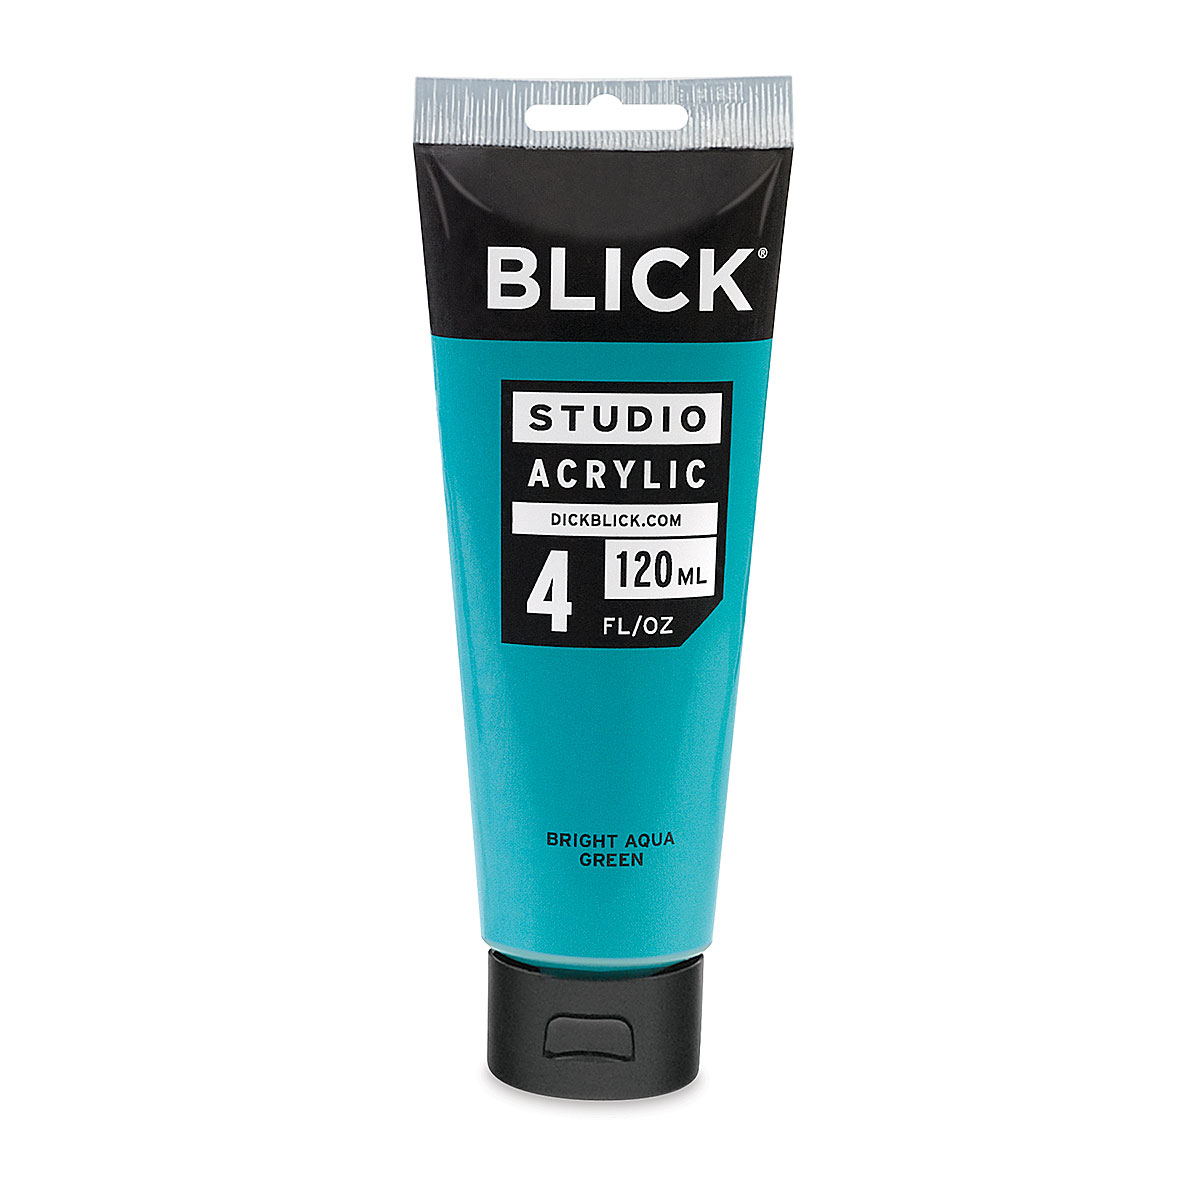 Blick Studio Acrylics - Green Light Permanent, 8 oz Tube